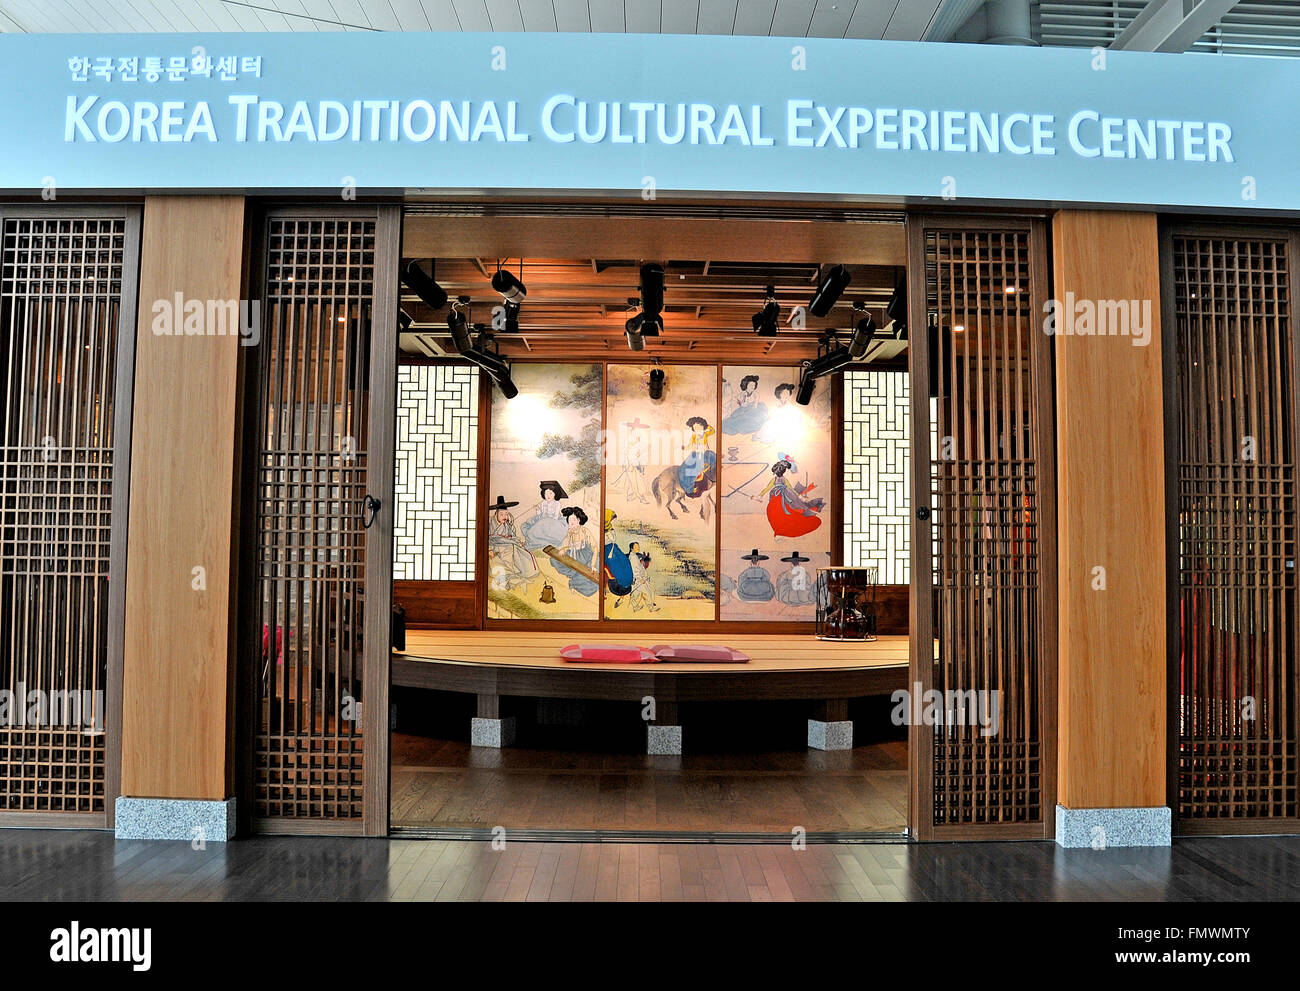 Korea Traditional Cultural Experience Center Incheon international airport South Korea Stock Photo